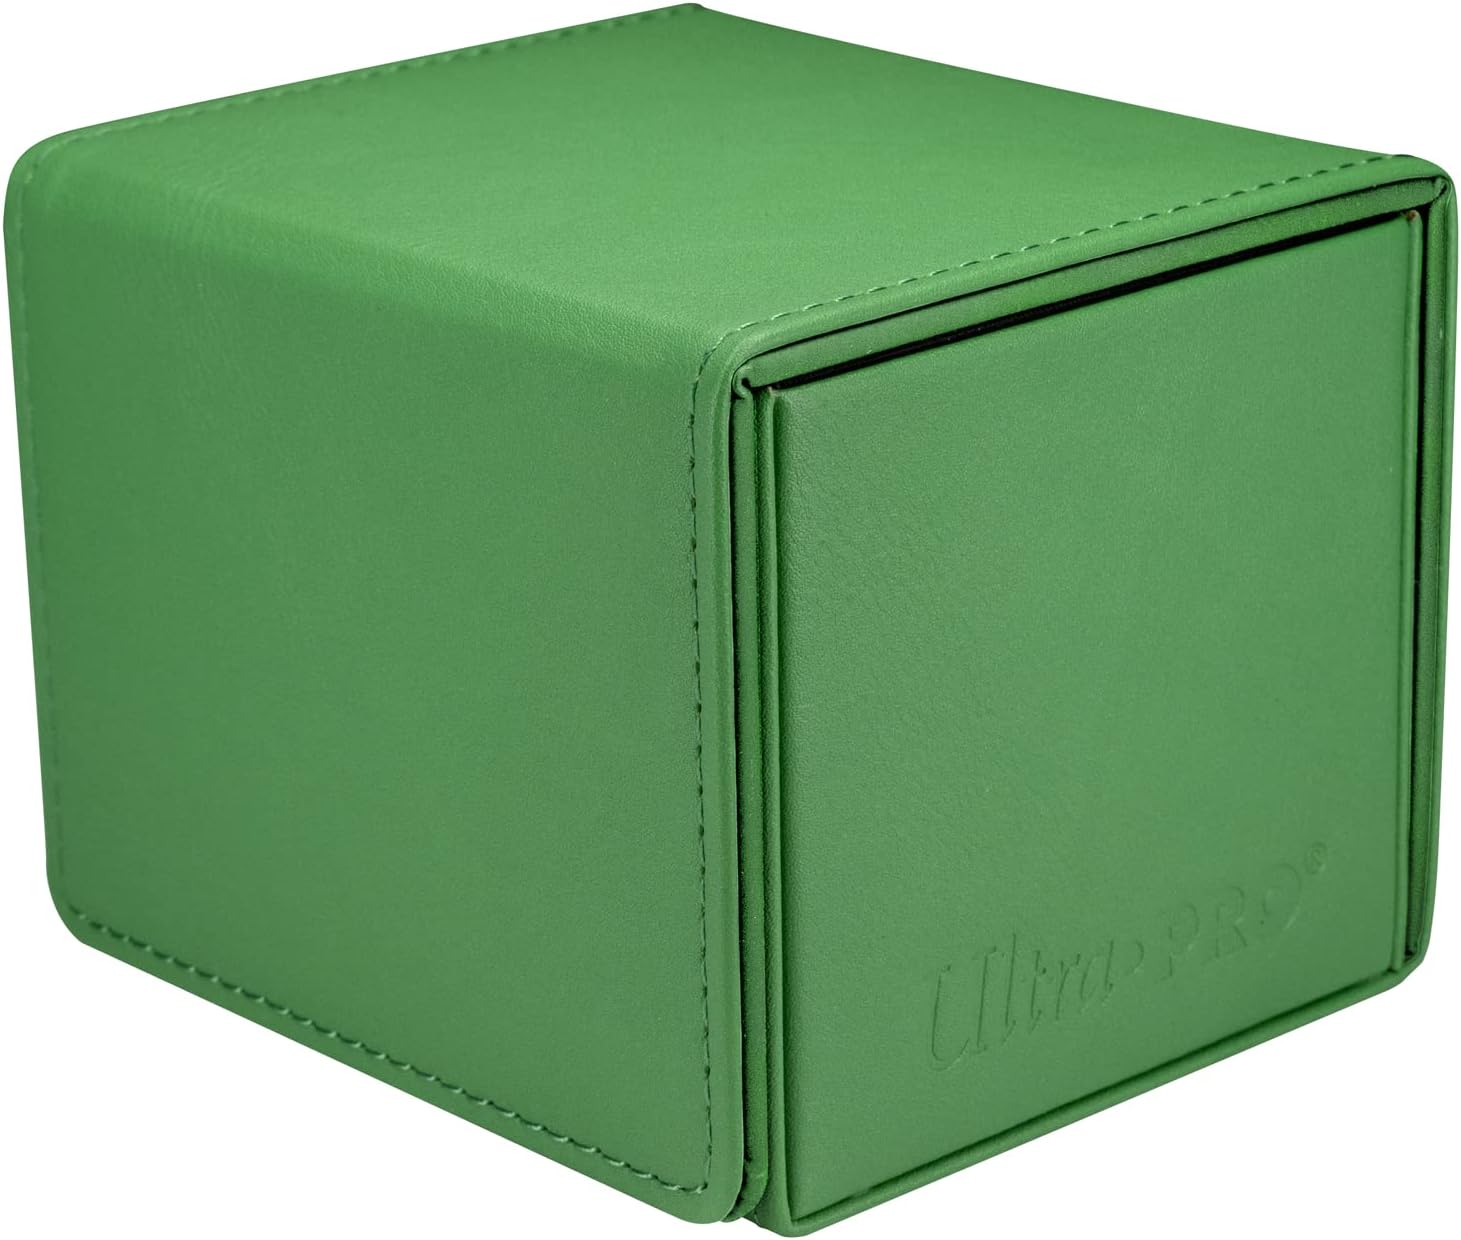 ULTRA PRO DECK BOX: VIVID EDGE GREEN